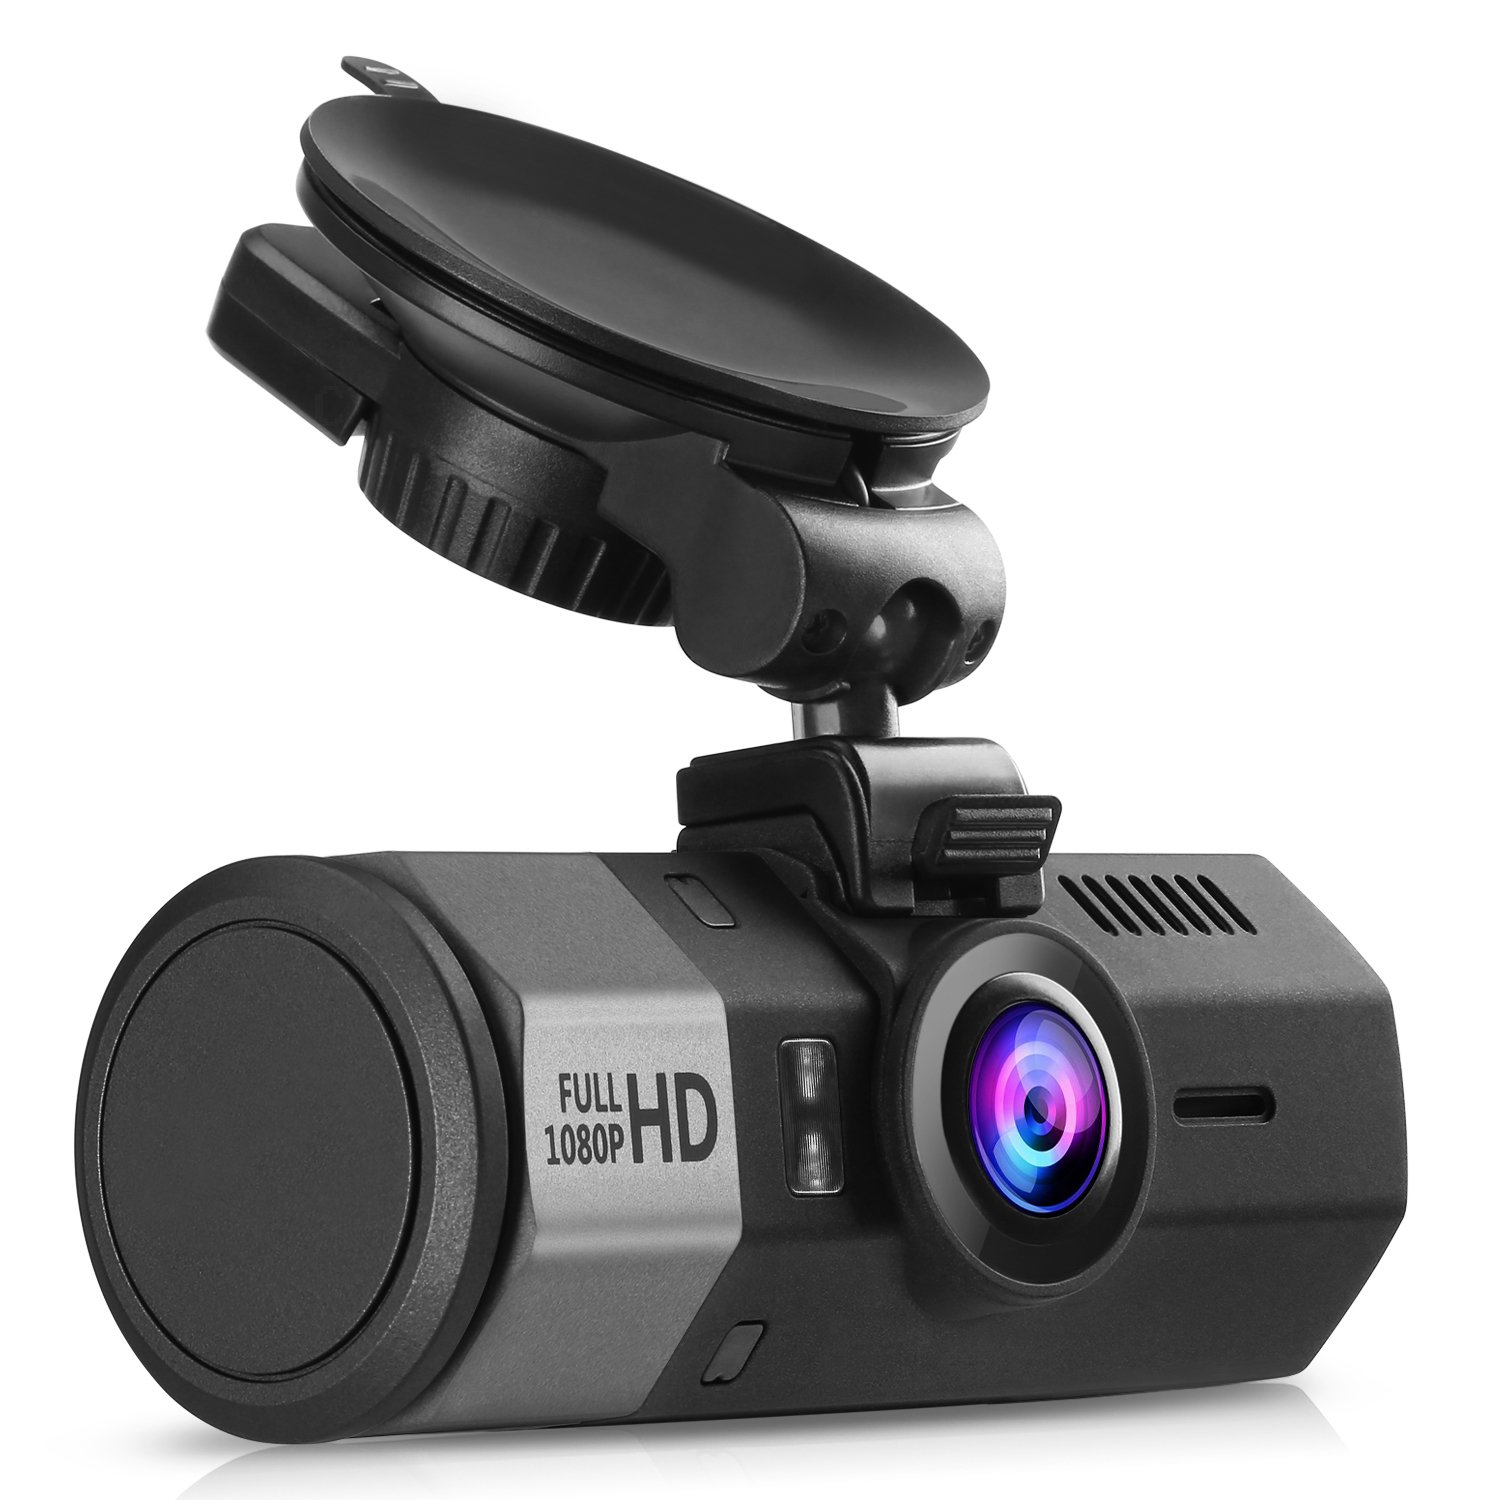 https://digital-vergleich.de/wp-content/uploads/2019/04/Oasser-Autokamera-Dashcam-Car.jpg